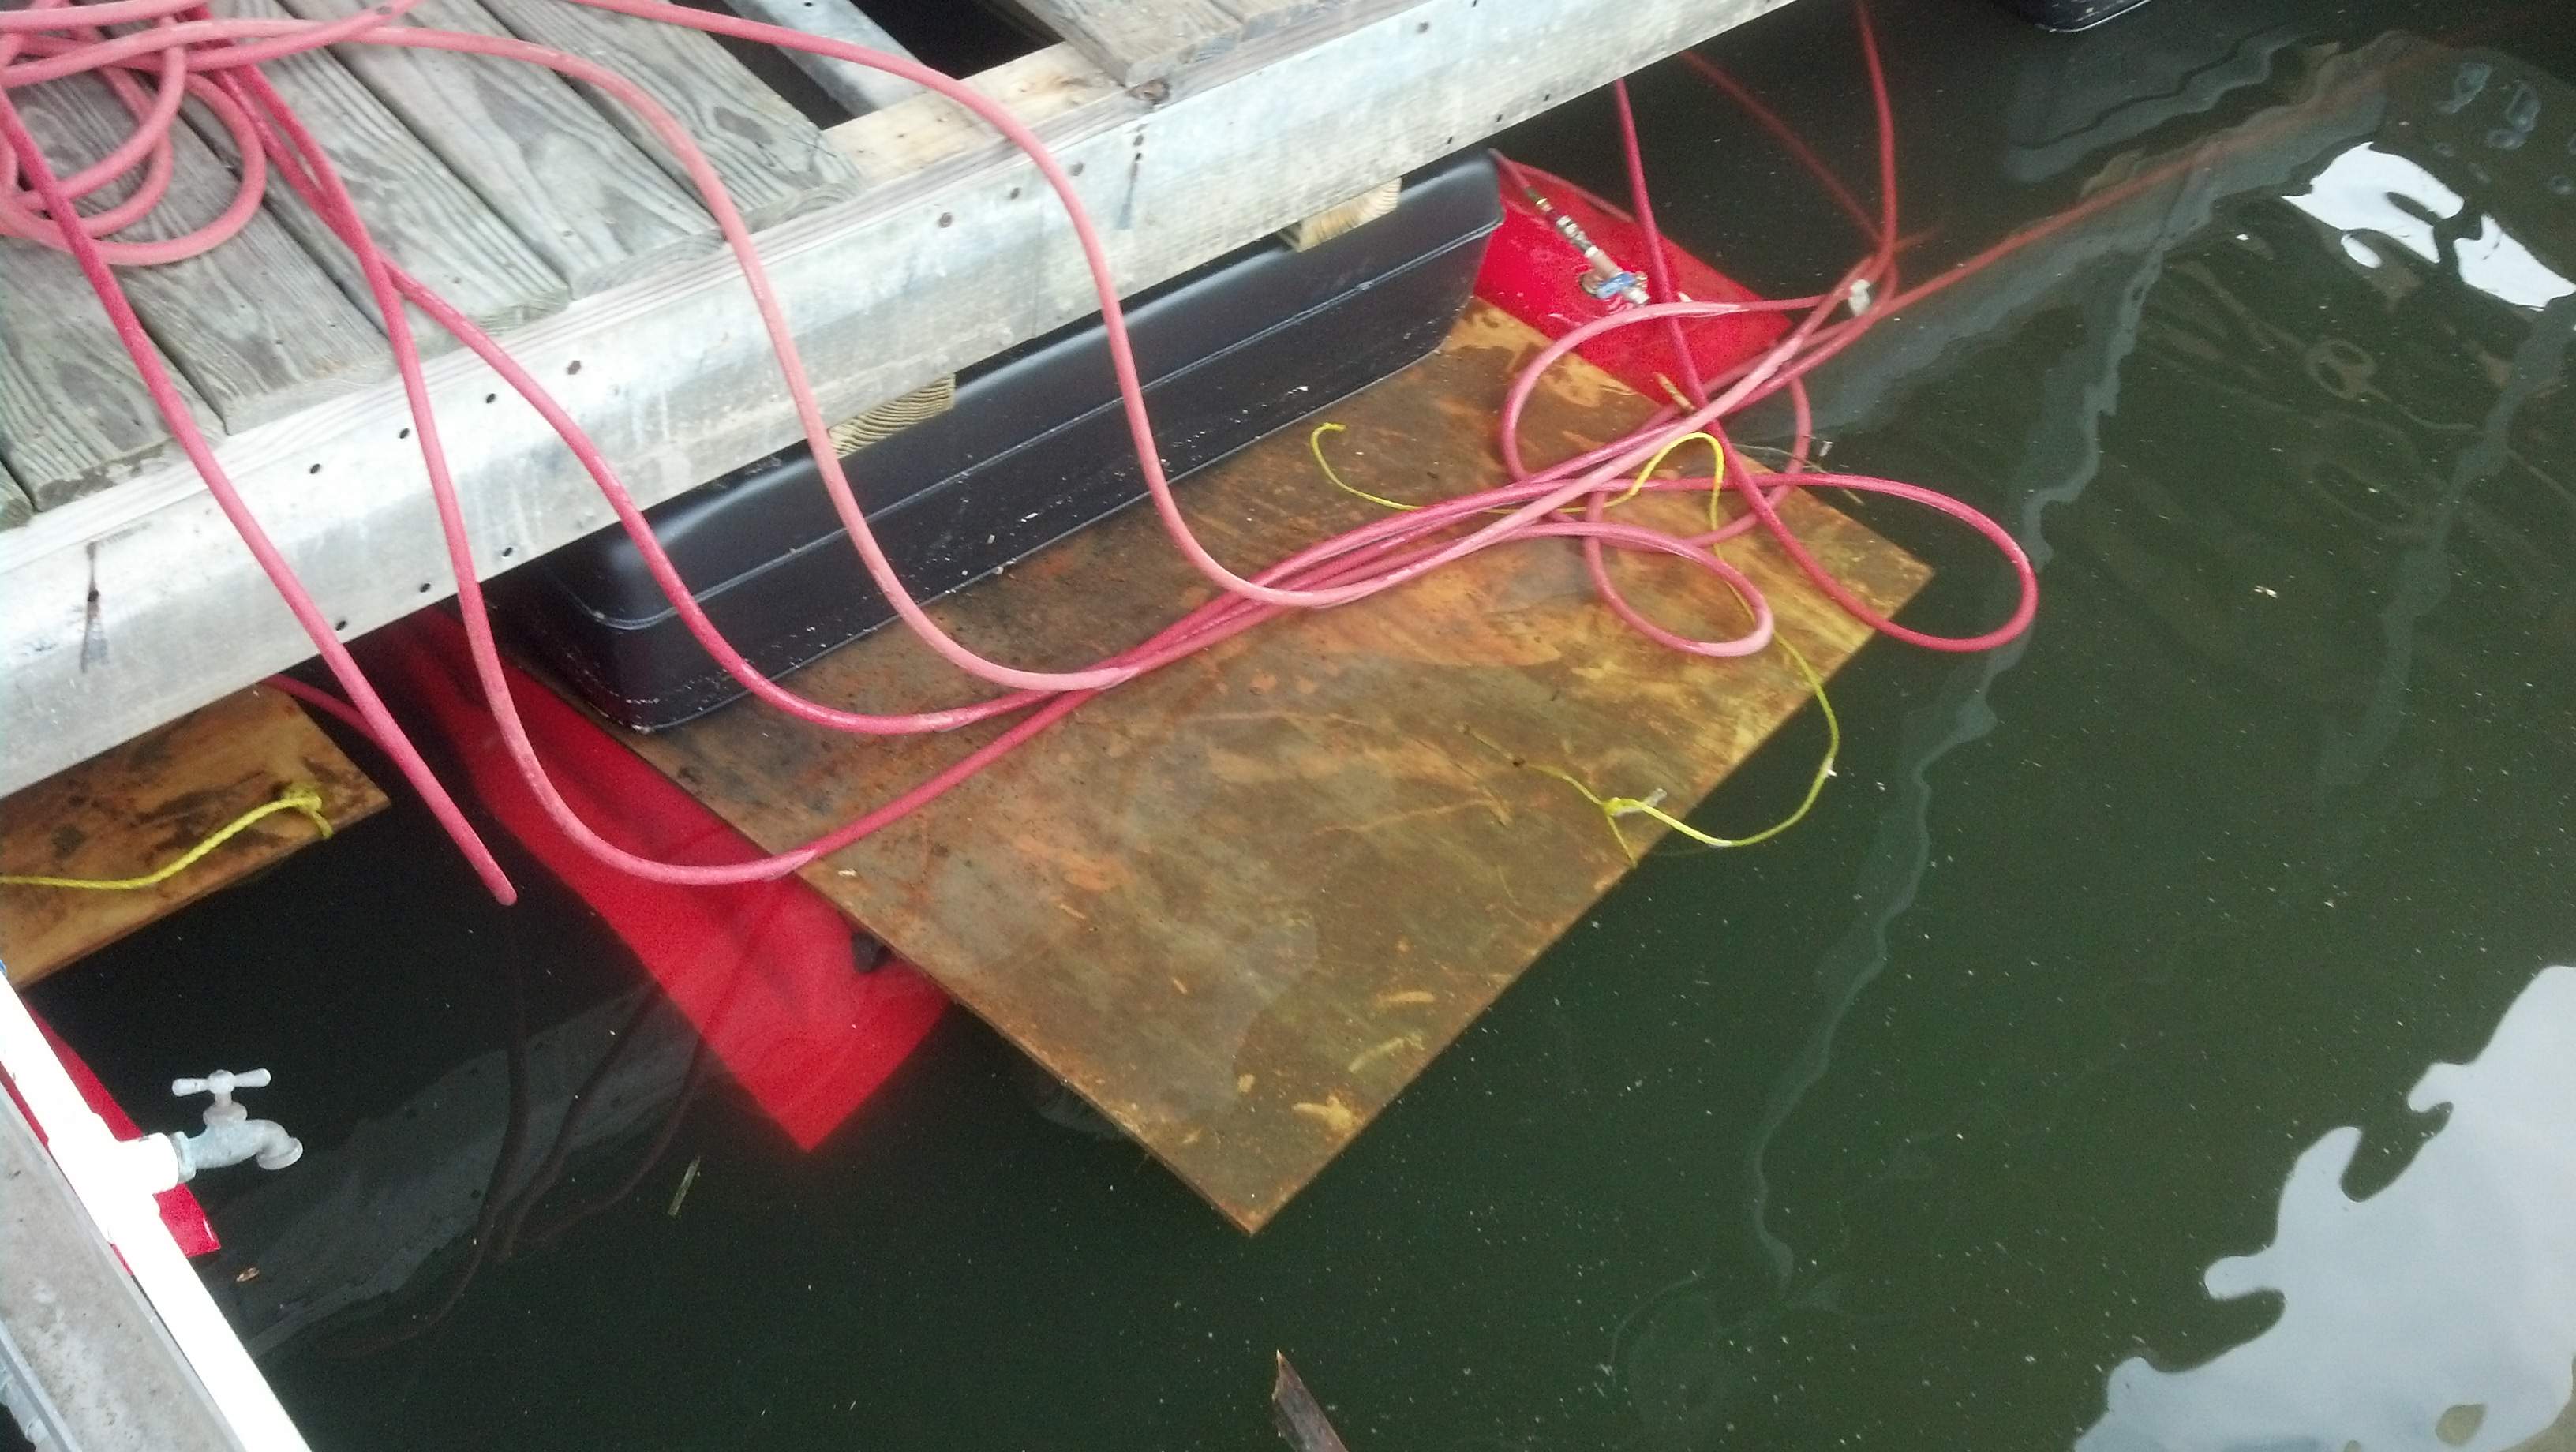 Change floats lift dock air bags